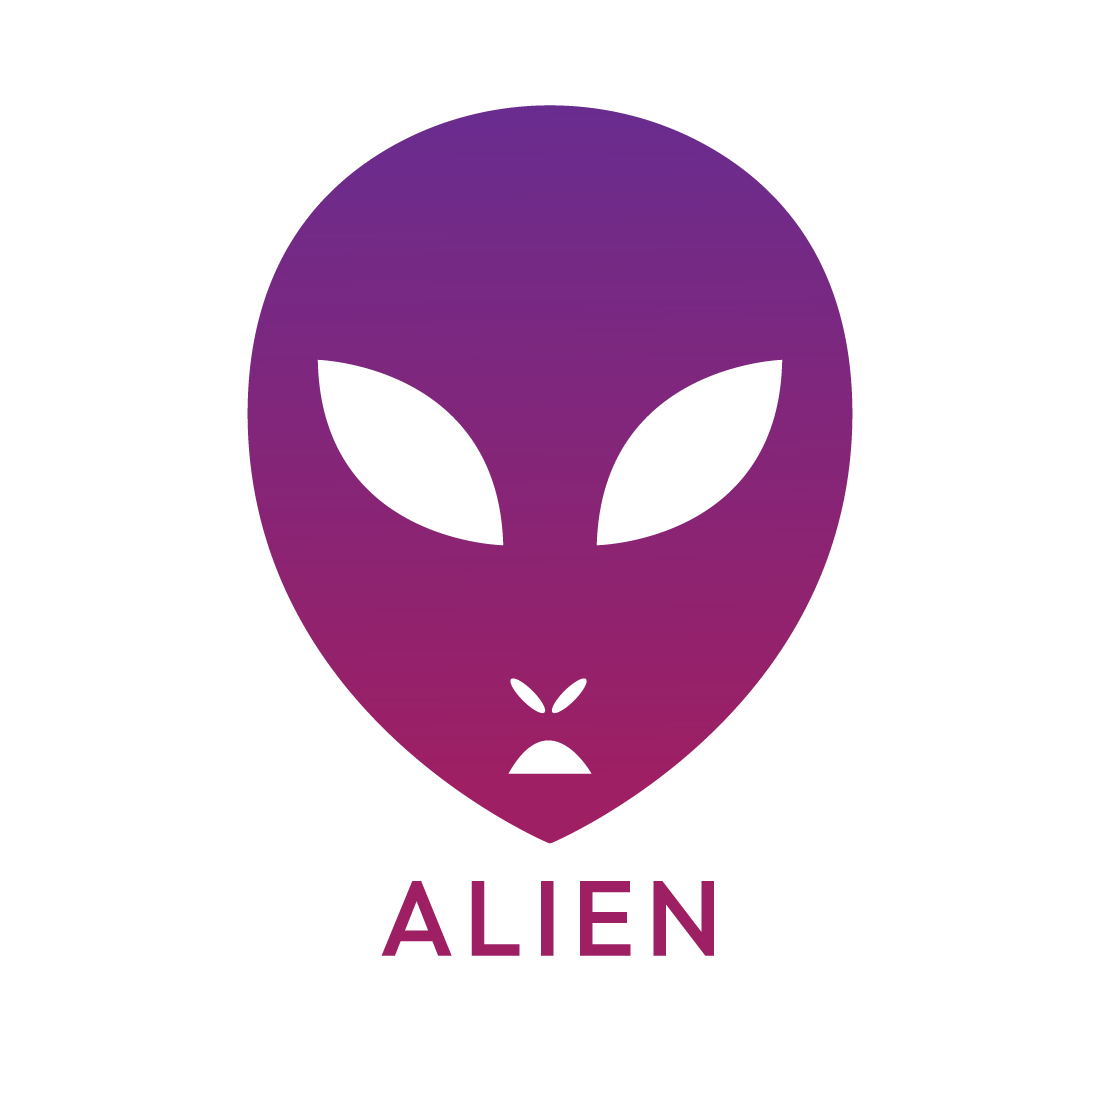 Minimalist Alien Logo Design Bundle - Master Collection cover image.